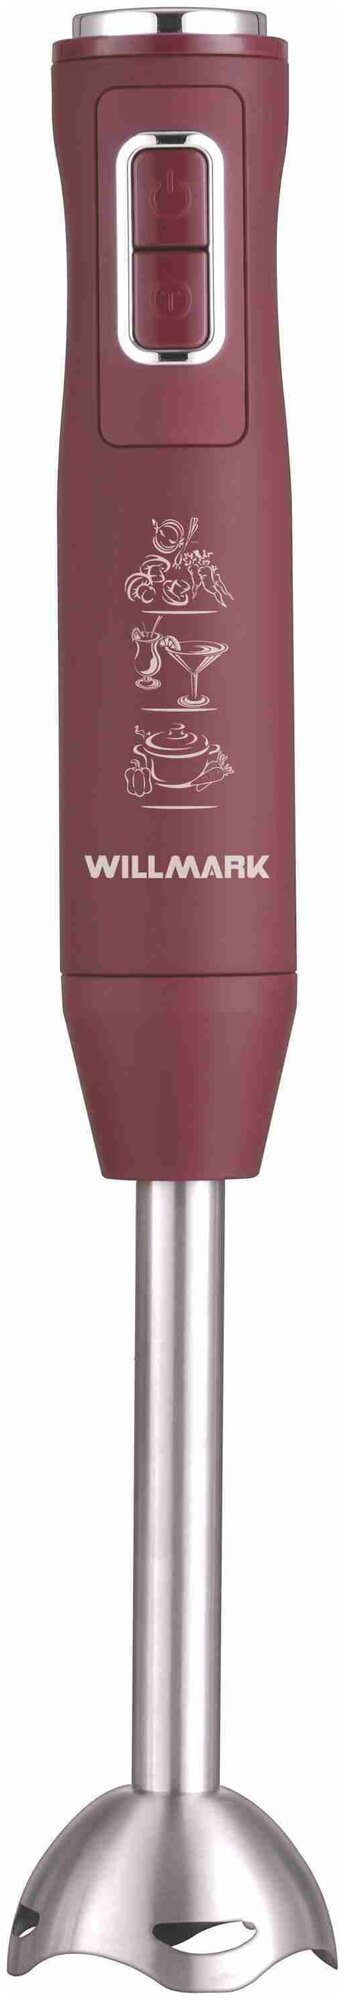 Willmark whb-1150ps бордовый